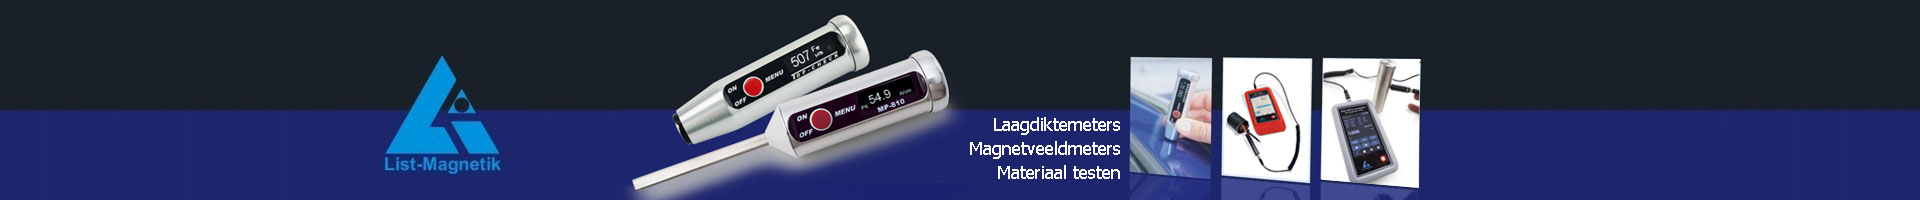 List-Magnetik GmbH